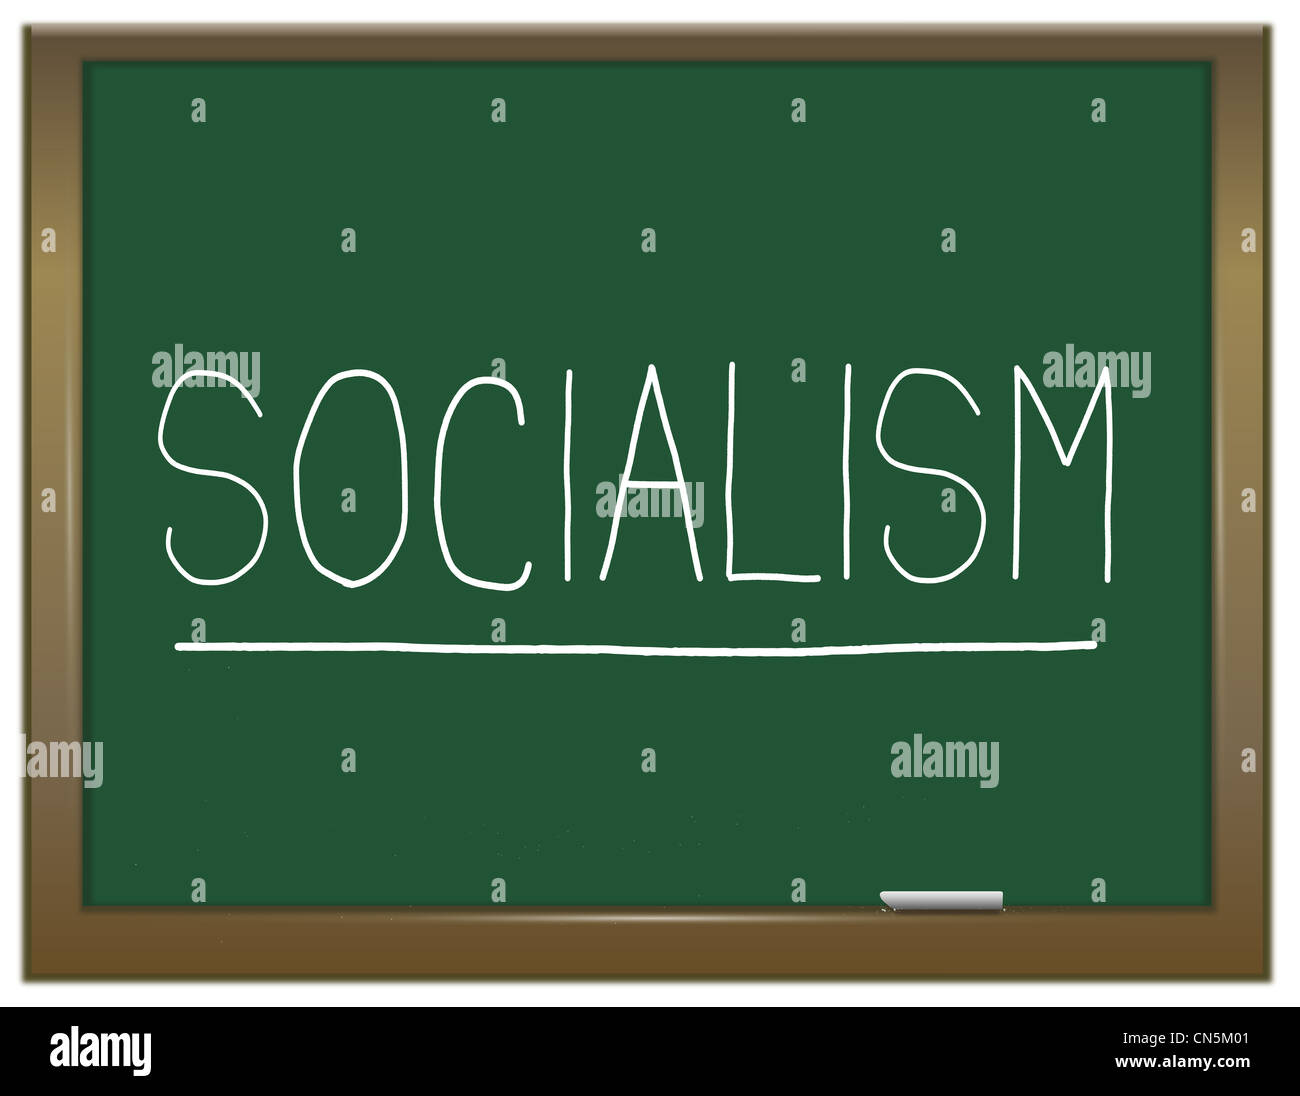 Socialism. Stock Photo